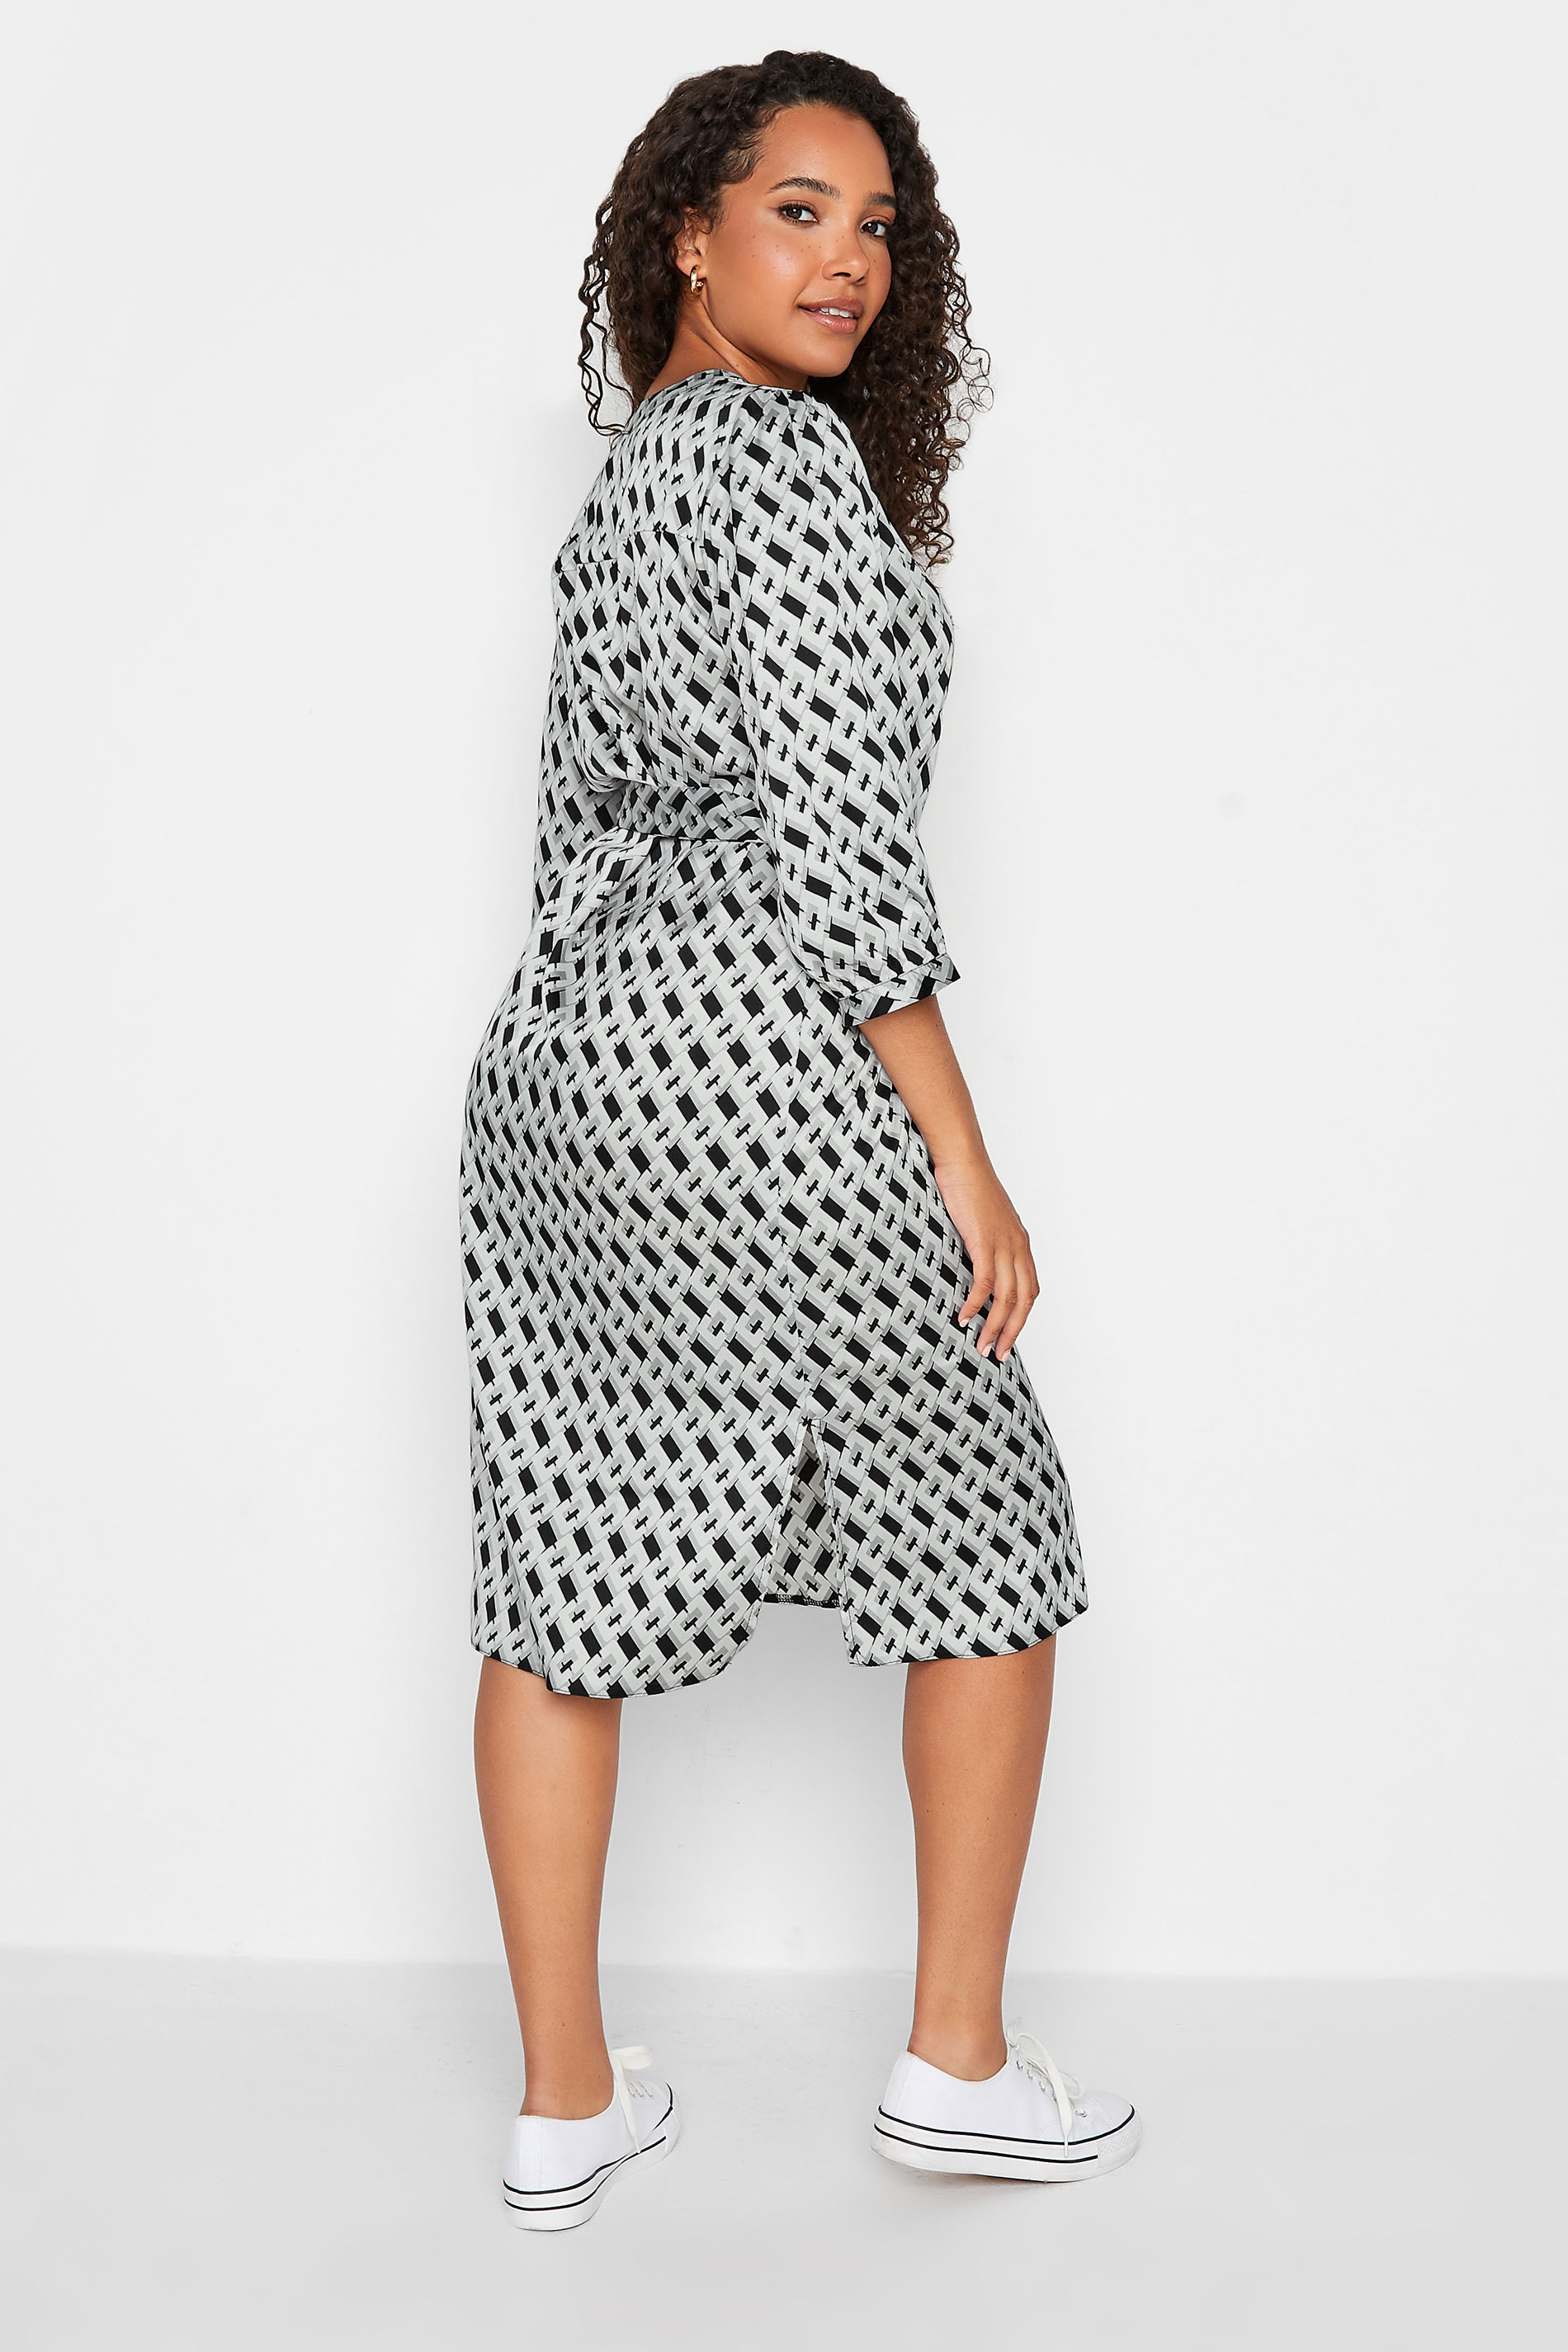 M&Co Black Geometric Print Satin Tunic Dress | M&Co 3